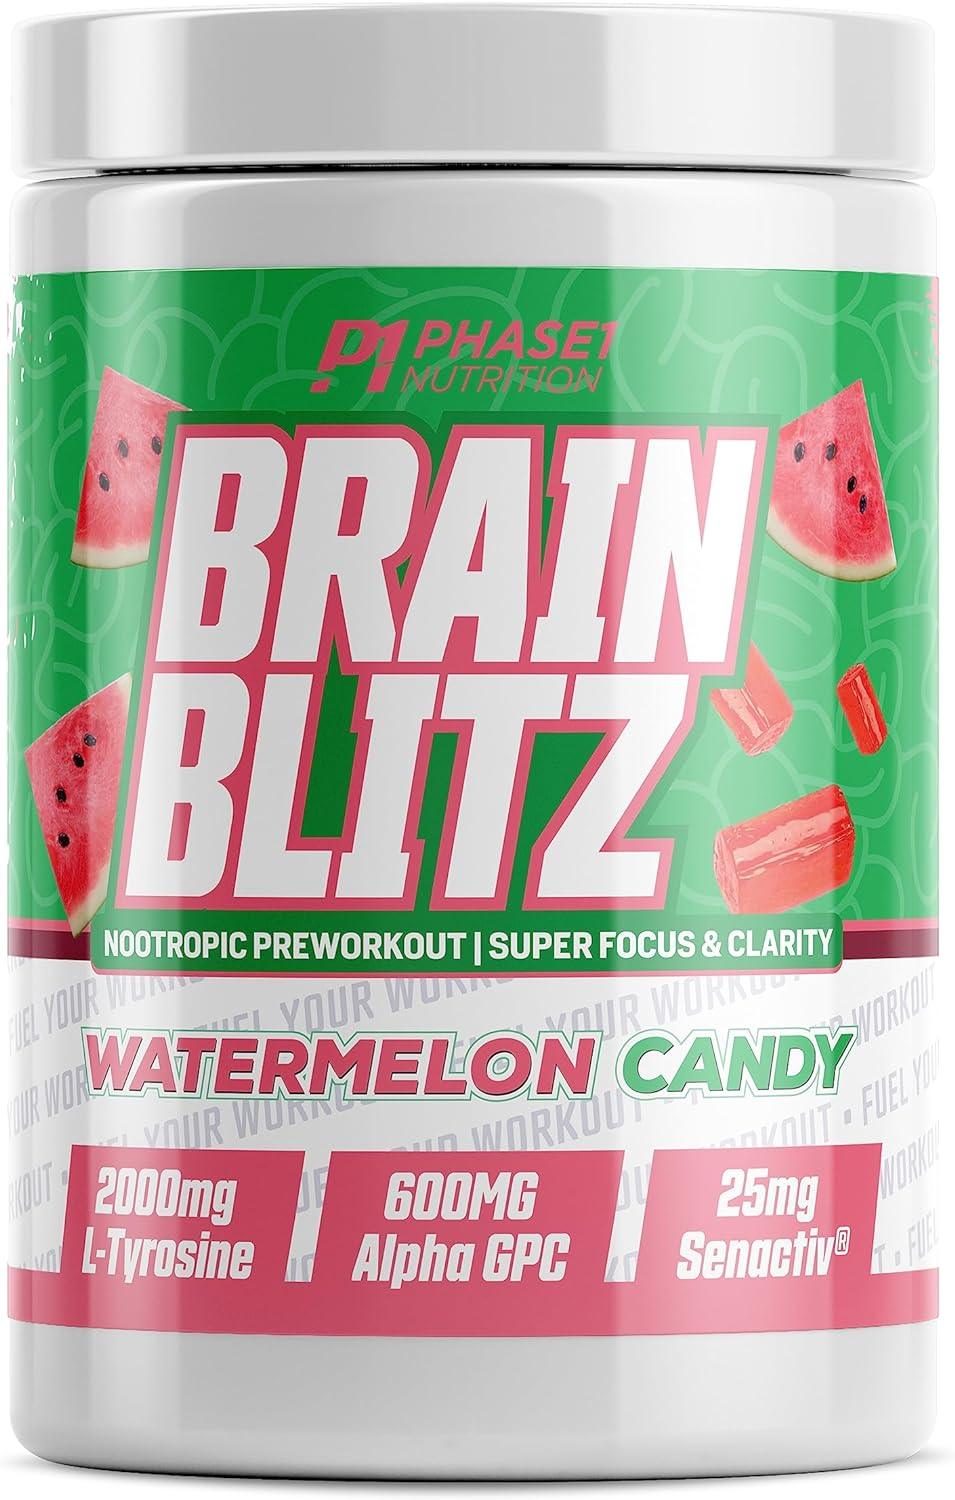 Brain Blitz - Phase 1 Nutrition